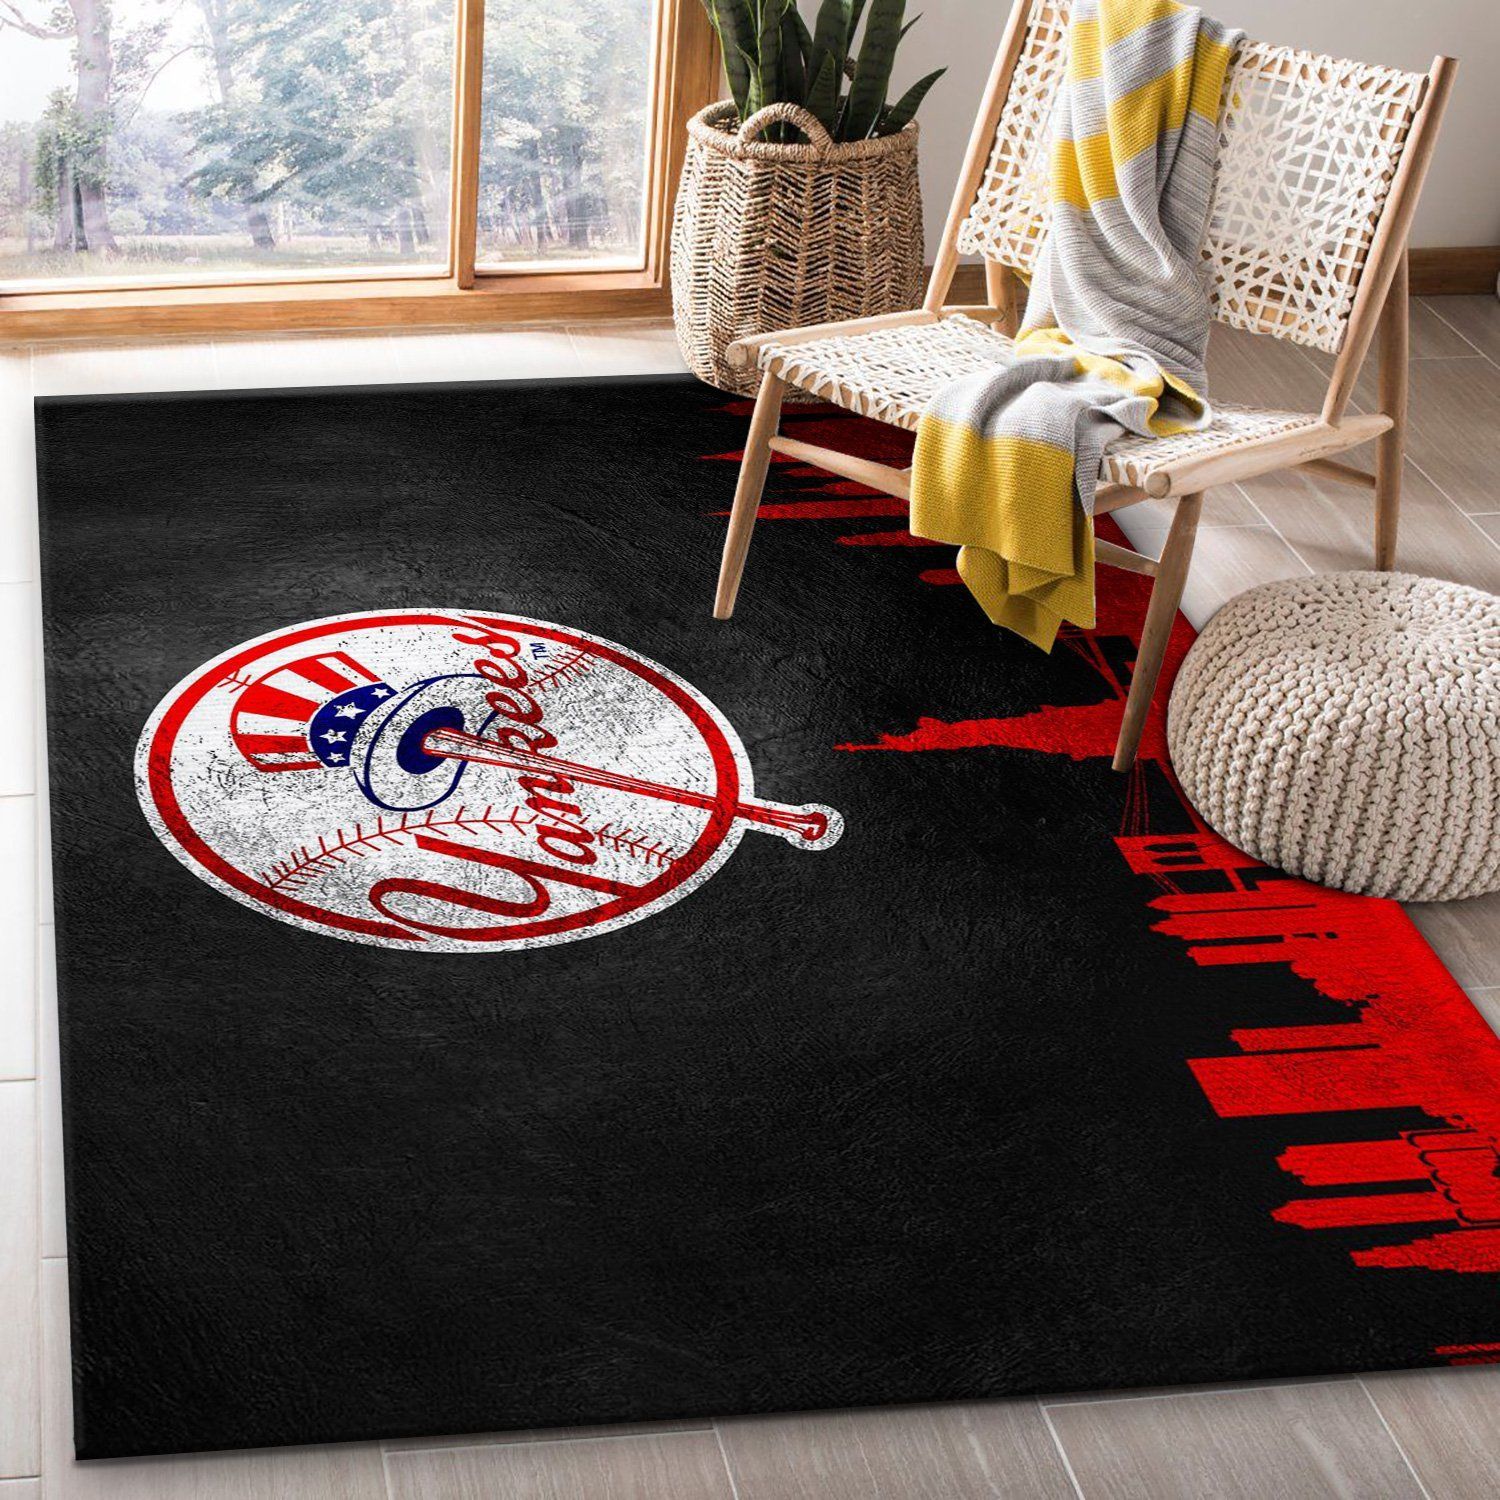 New York Yankees Skyline football Floor home decoration carpet rug